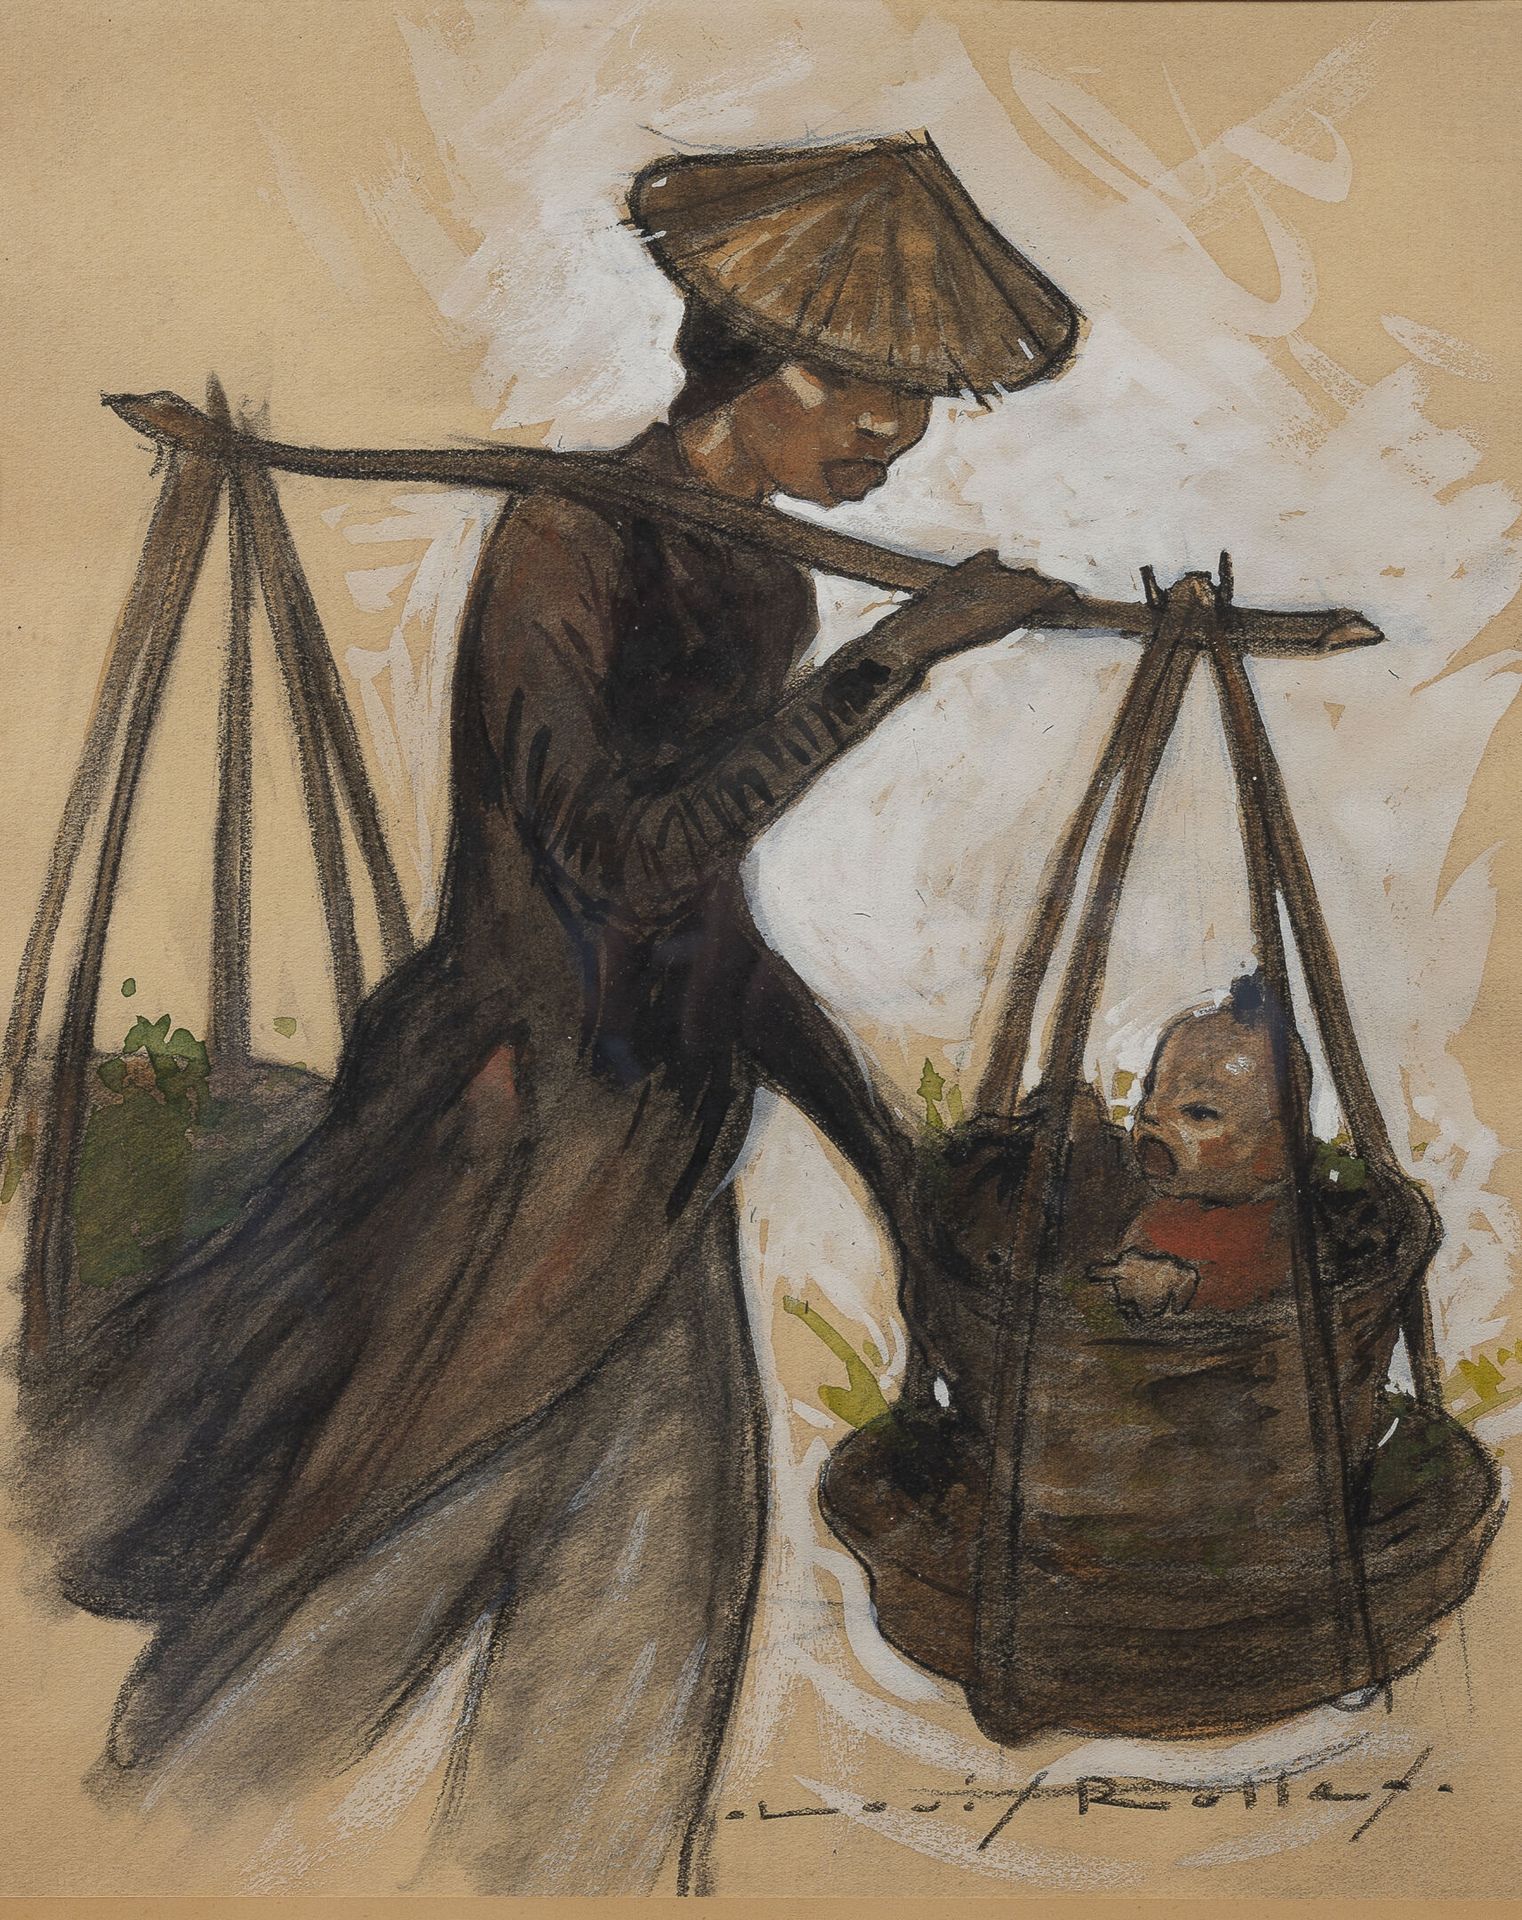 Louis ROLLET (1895-1988) Frau, die ihr Kind in einem Korb trägt.

Kohle und Goua&hellip;